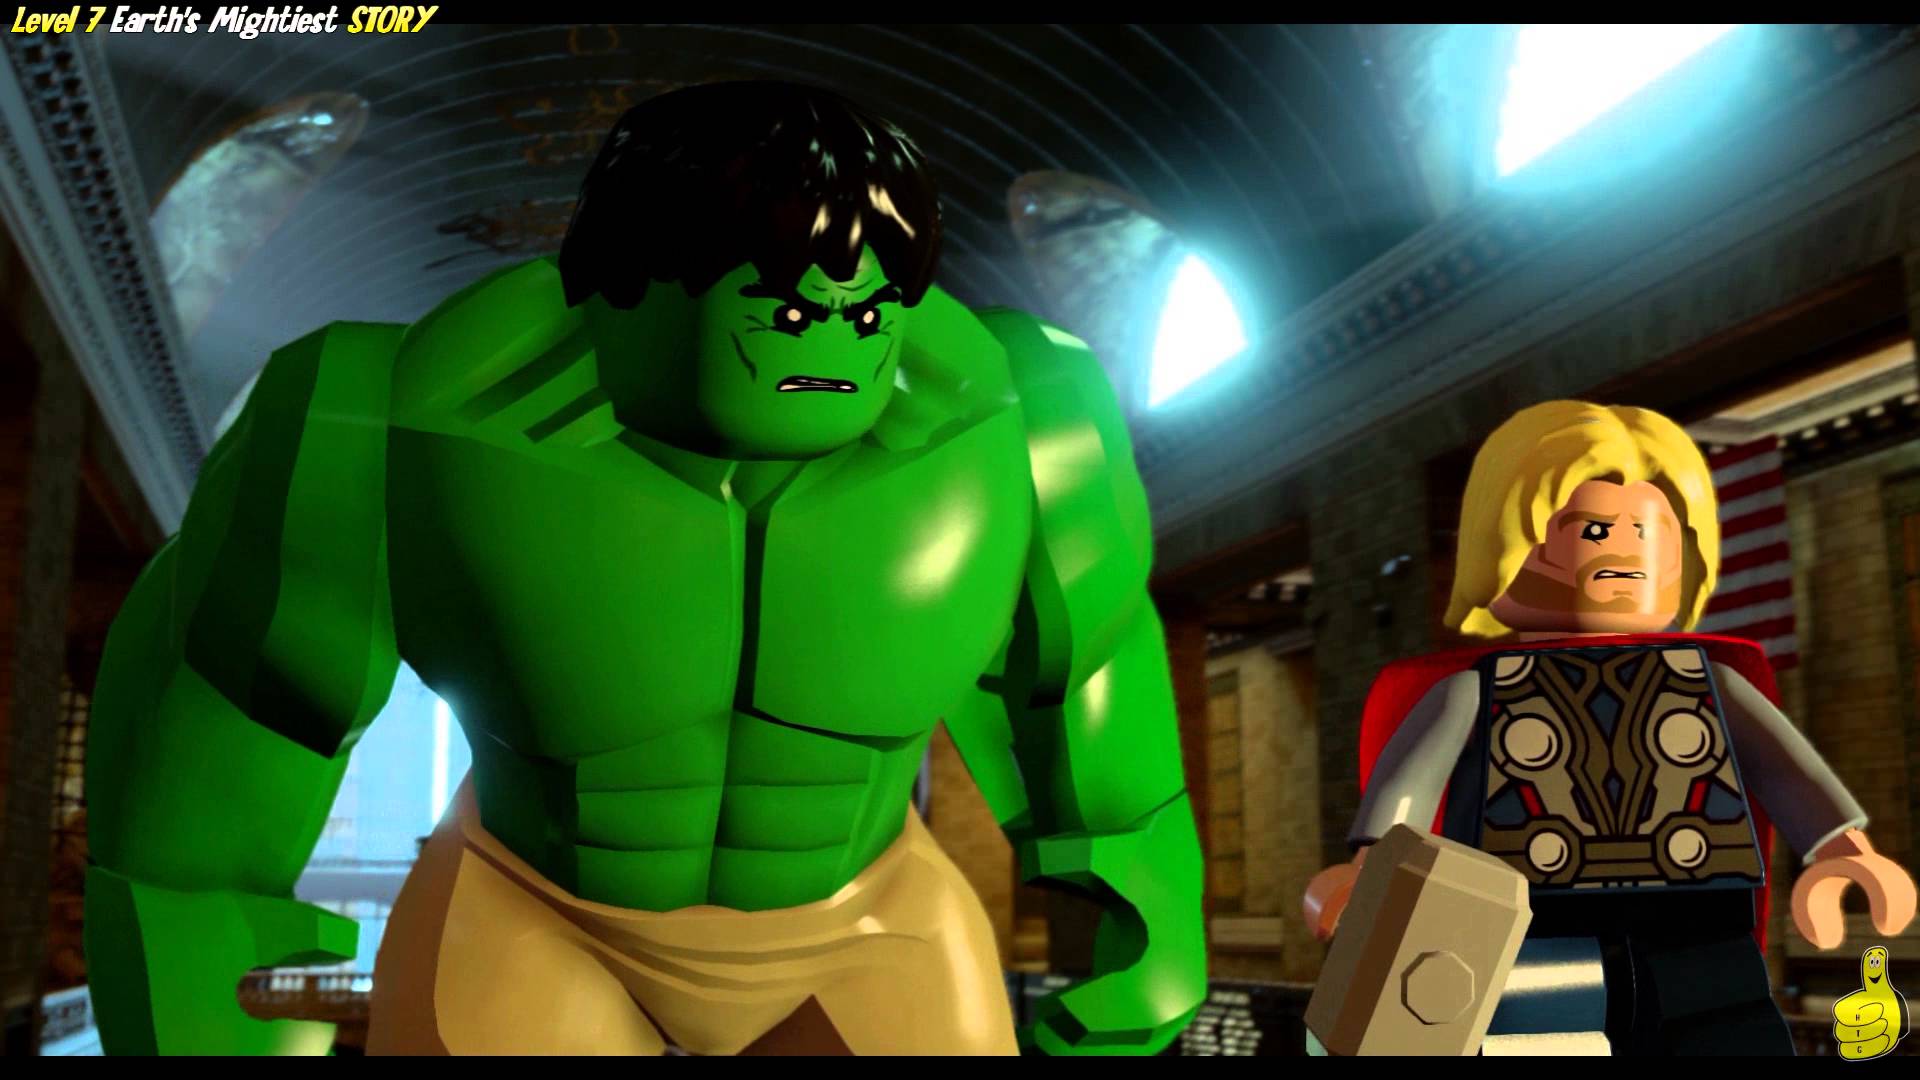 Lego Marvel Avengers: Level 7 STORY/Earth’s Mightiest Trophy/Achievement – HTG